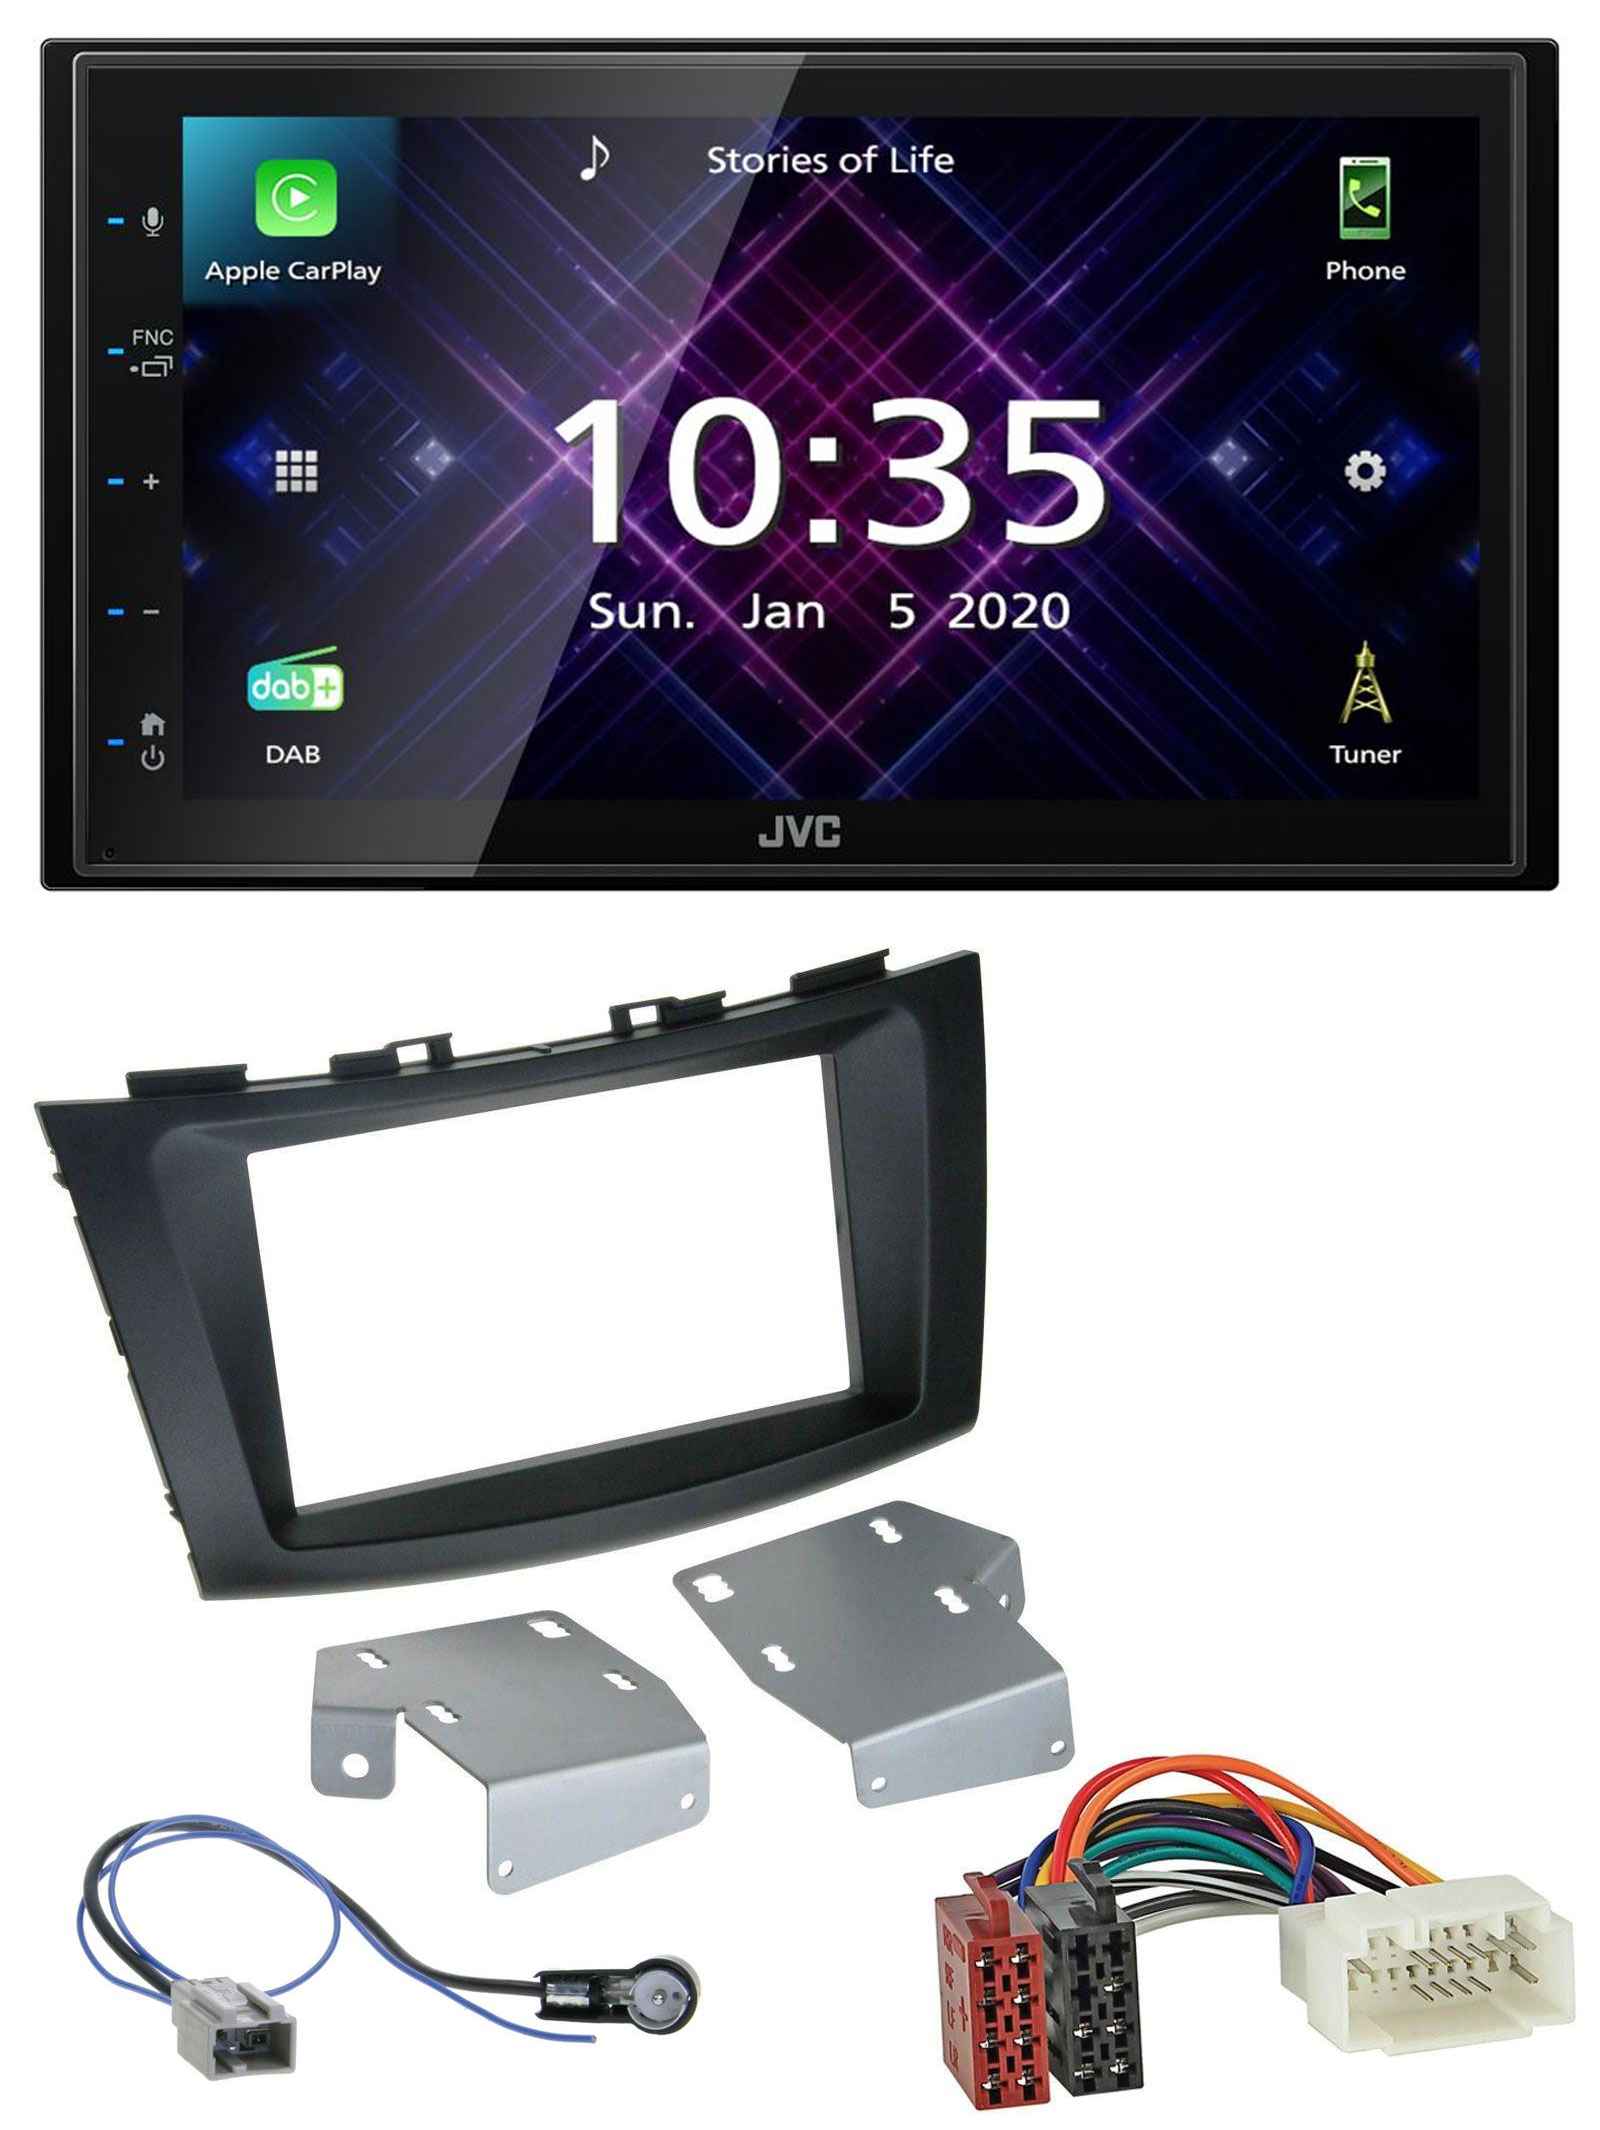 JVC DAB 2DIN MP3 Bluetooth USB Autoradio für Suzuki Swift